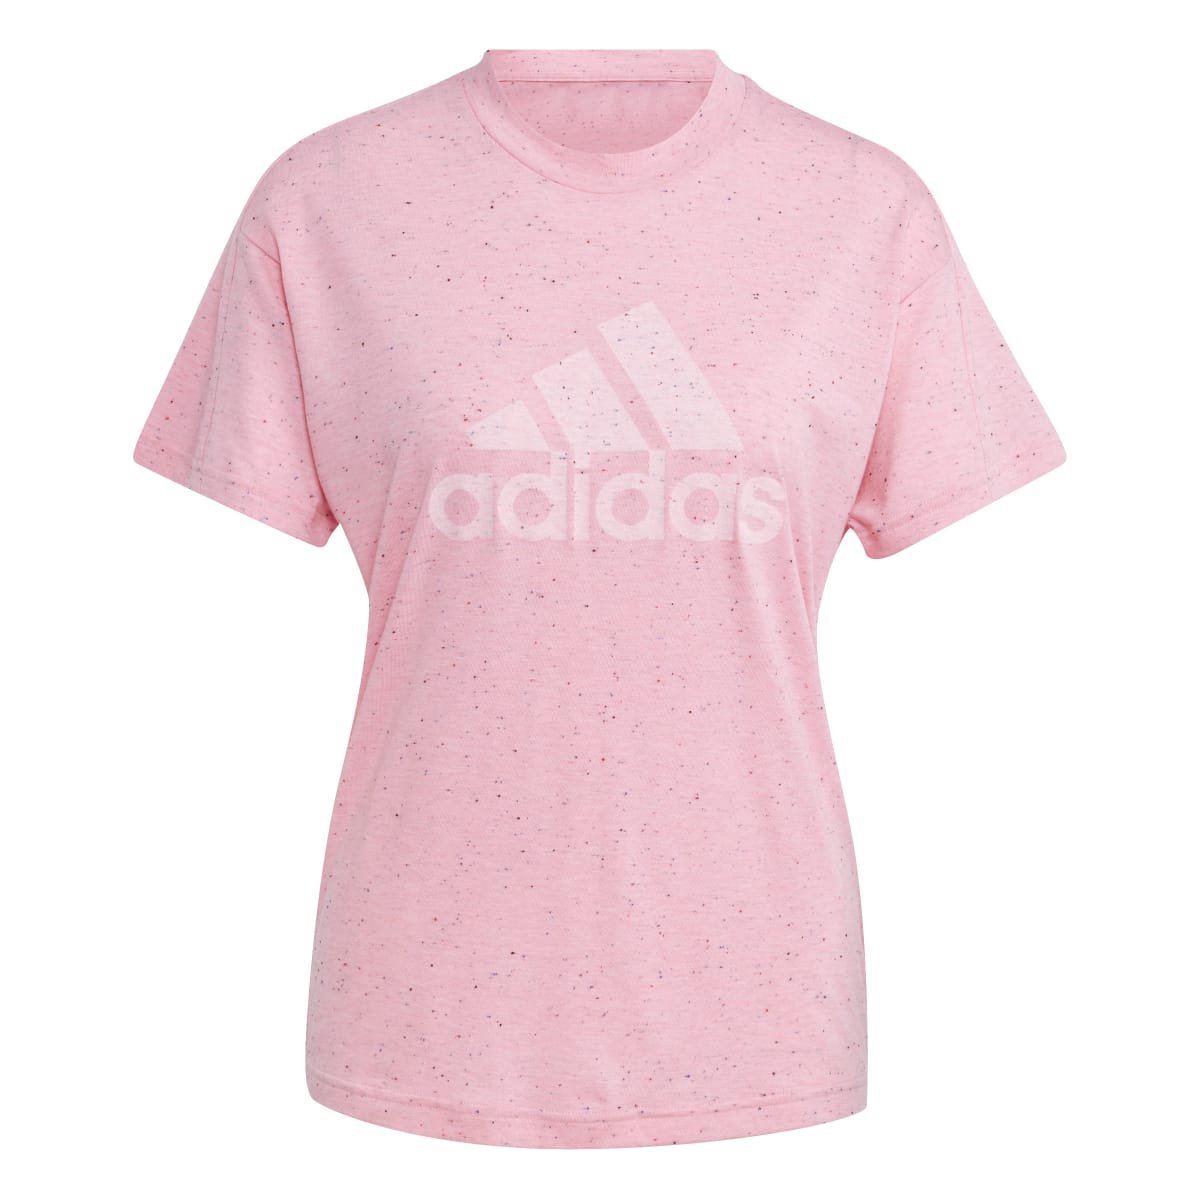 Icons Winners Fátima 3.0 Esportes - Sportswear Future - Feminina adidas Camiseta